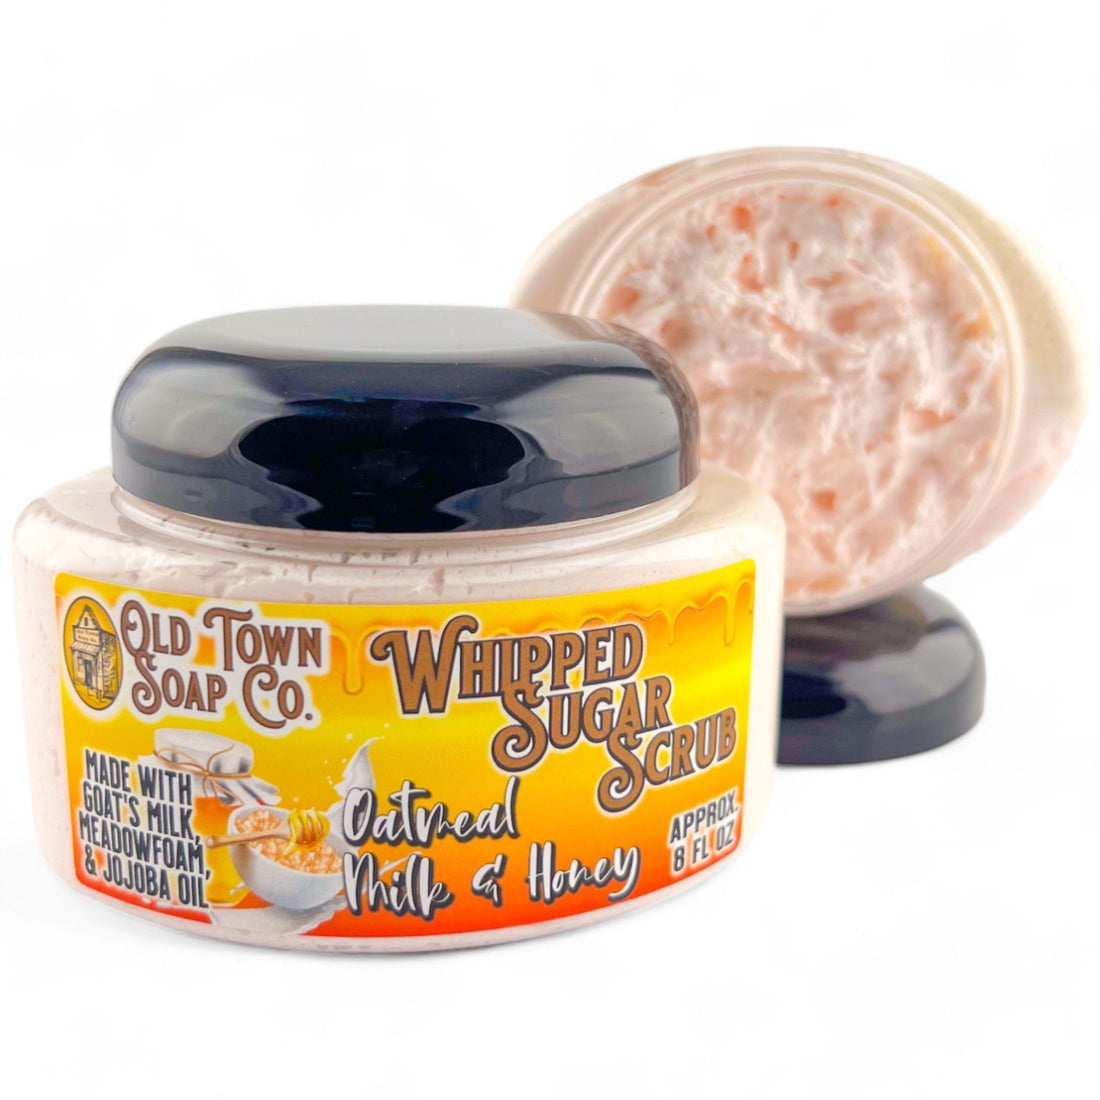 Oatmeal, Milk &amp; Honey -Whipped Sugar Scrub Soap - Old Town Soap Co.